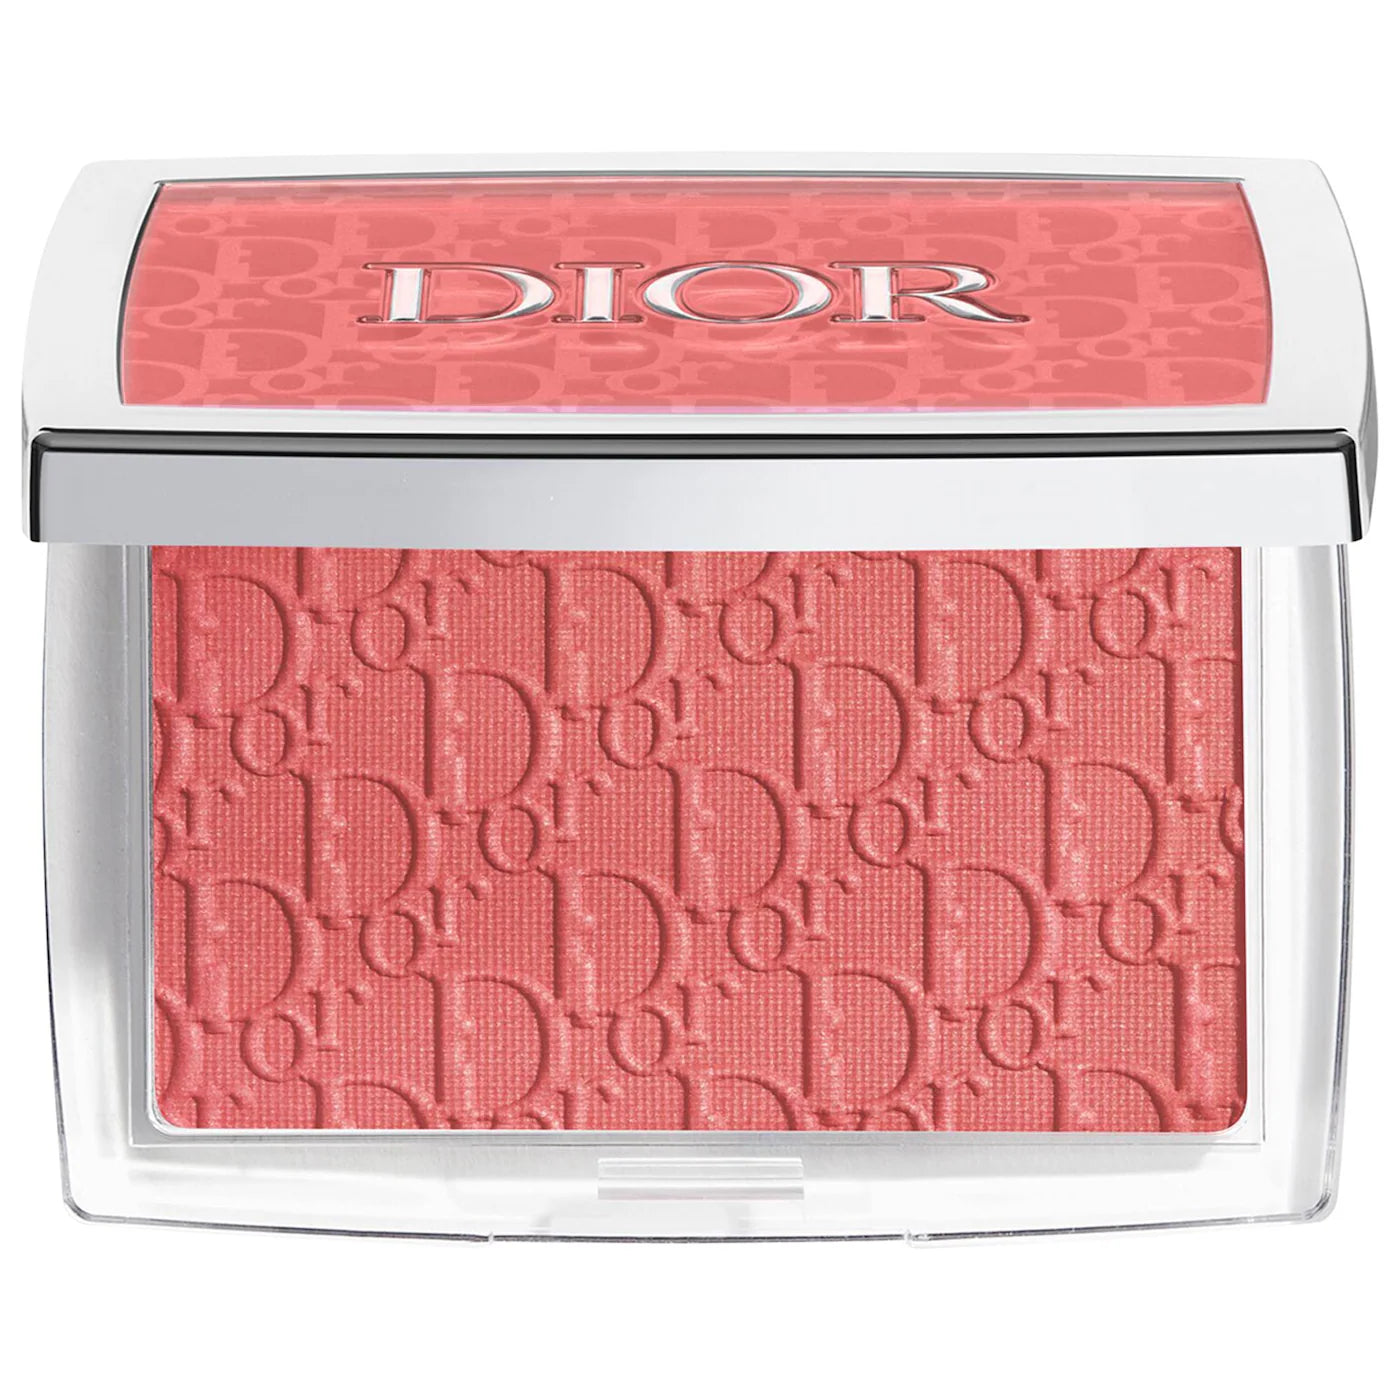 Deluxe: Dior backstage blush